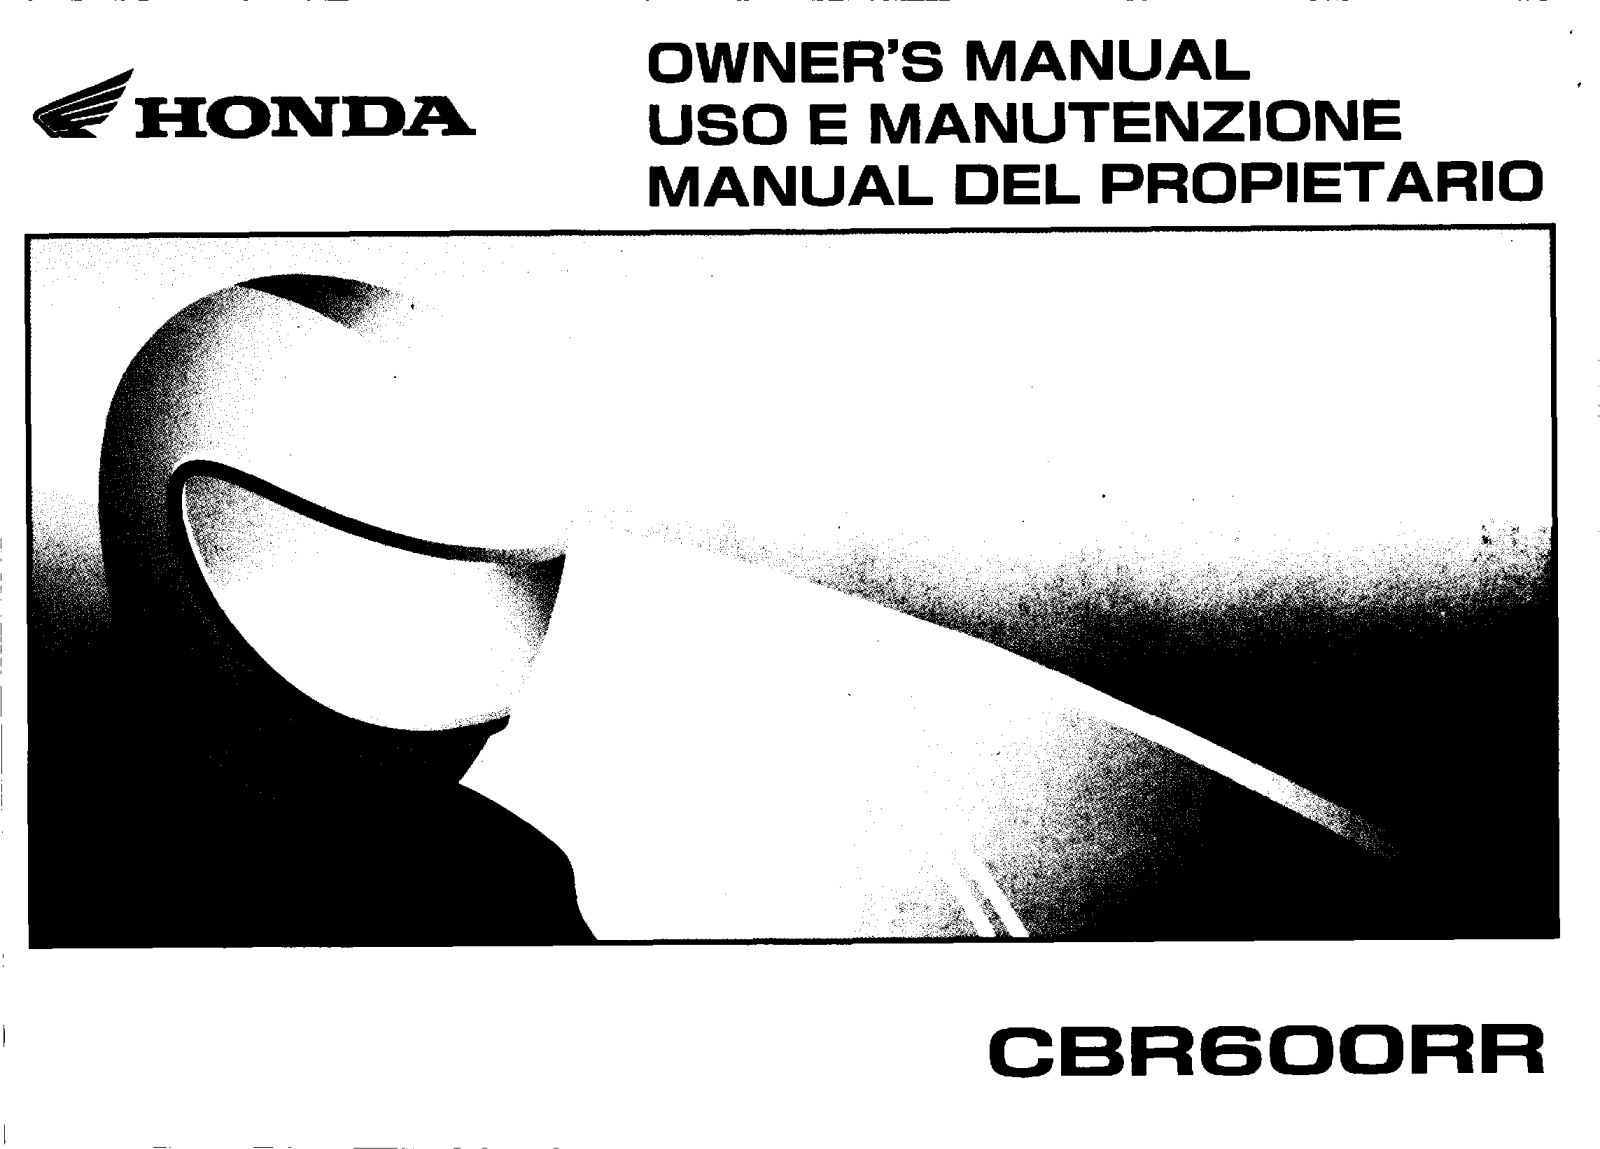 Honda CBR600RR Owner's Manual